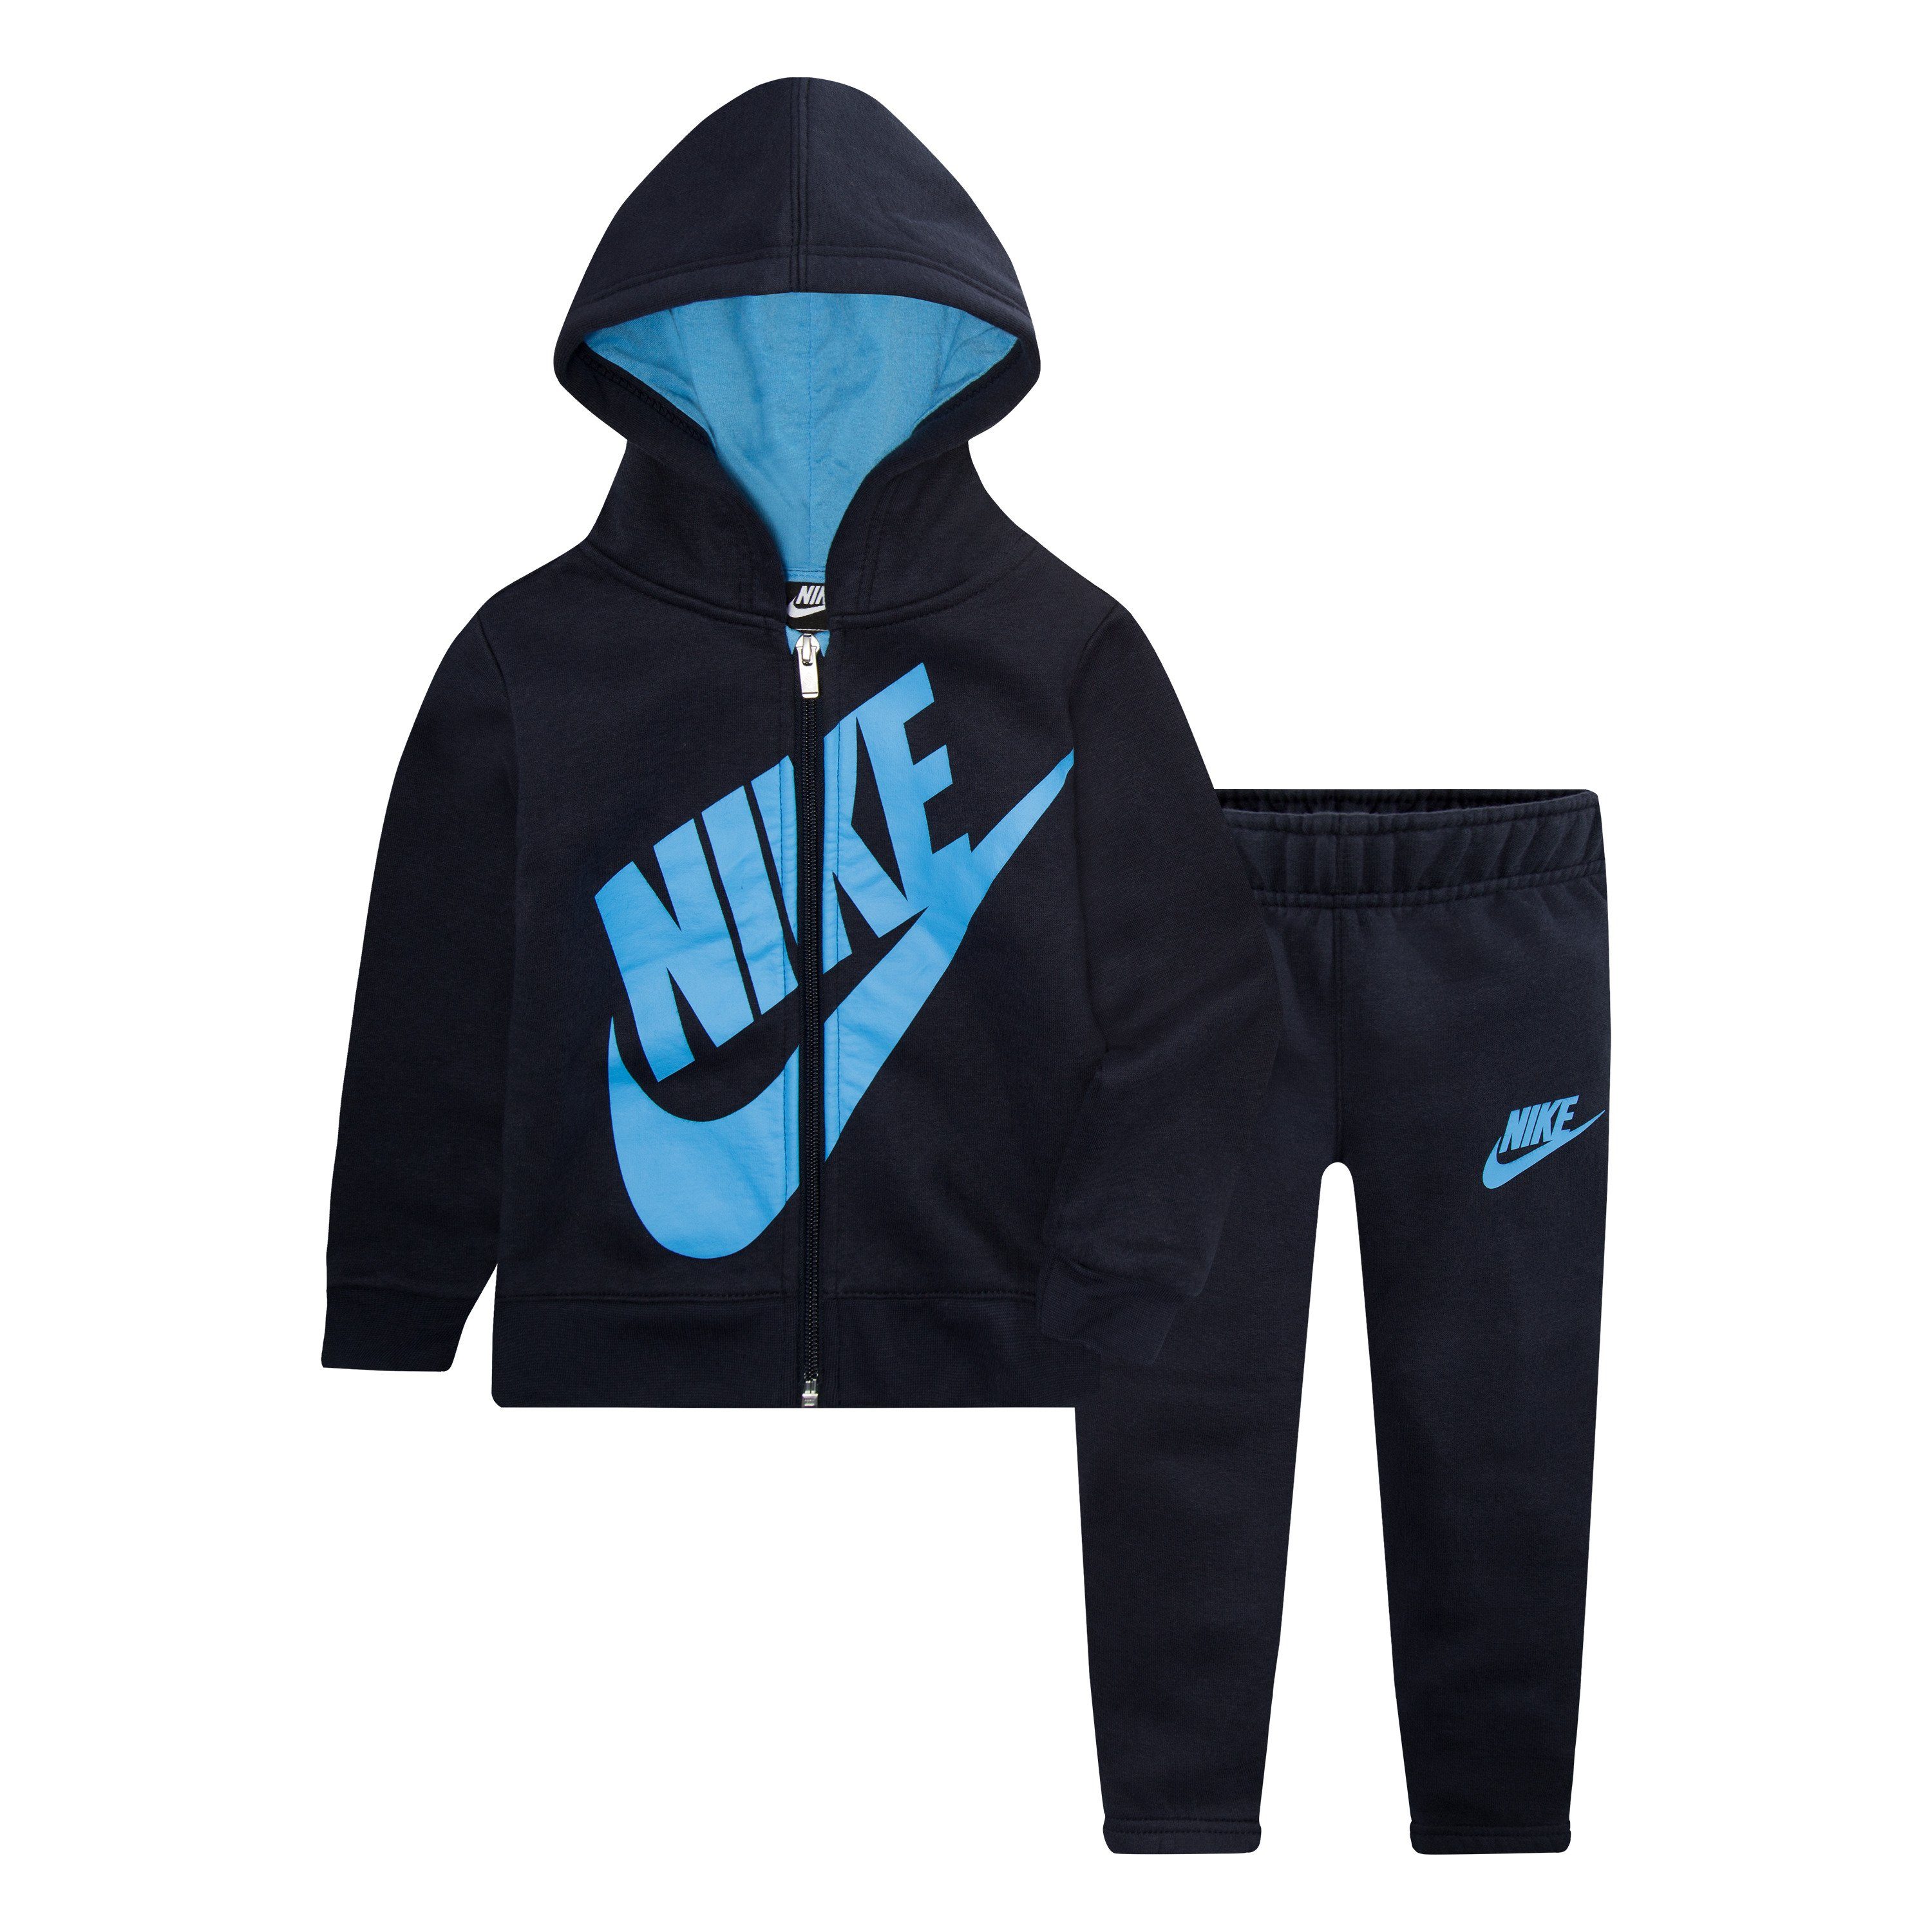 NKB Sportswear FUTURA Jogginganzug Nike SE FLEECE JOGG marine-blau SUEDED